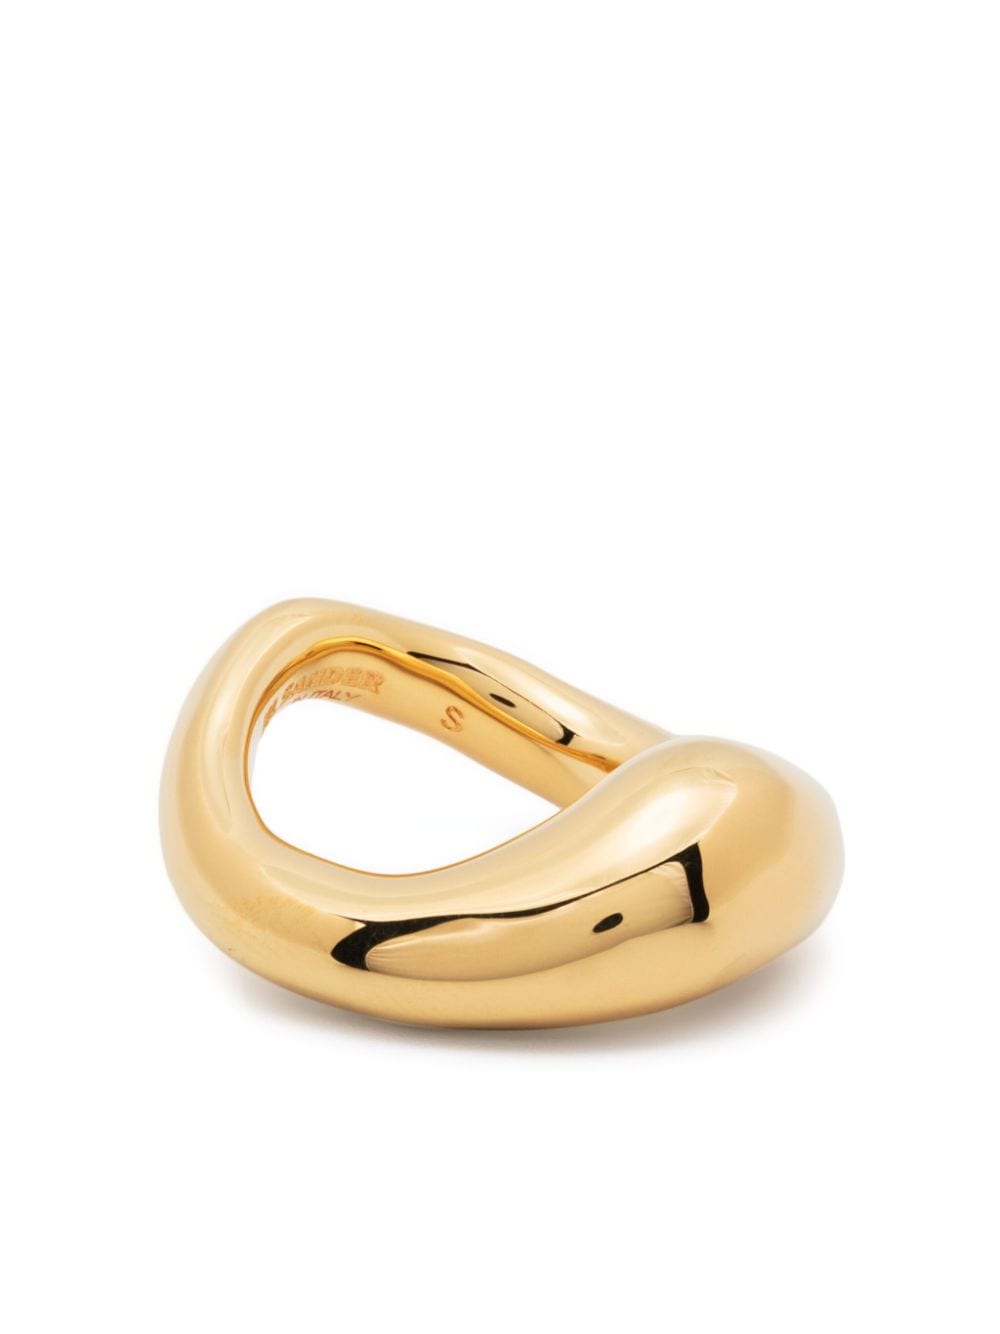 Jil Sander handcrafted brass ring - Gold von Jil Sander